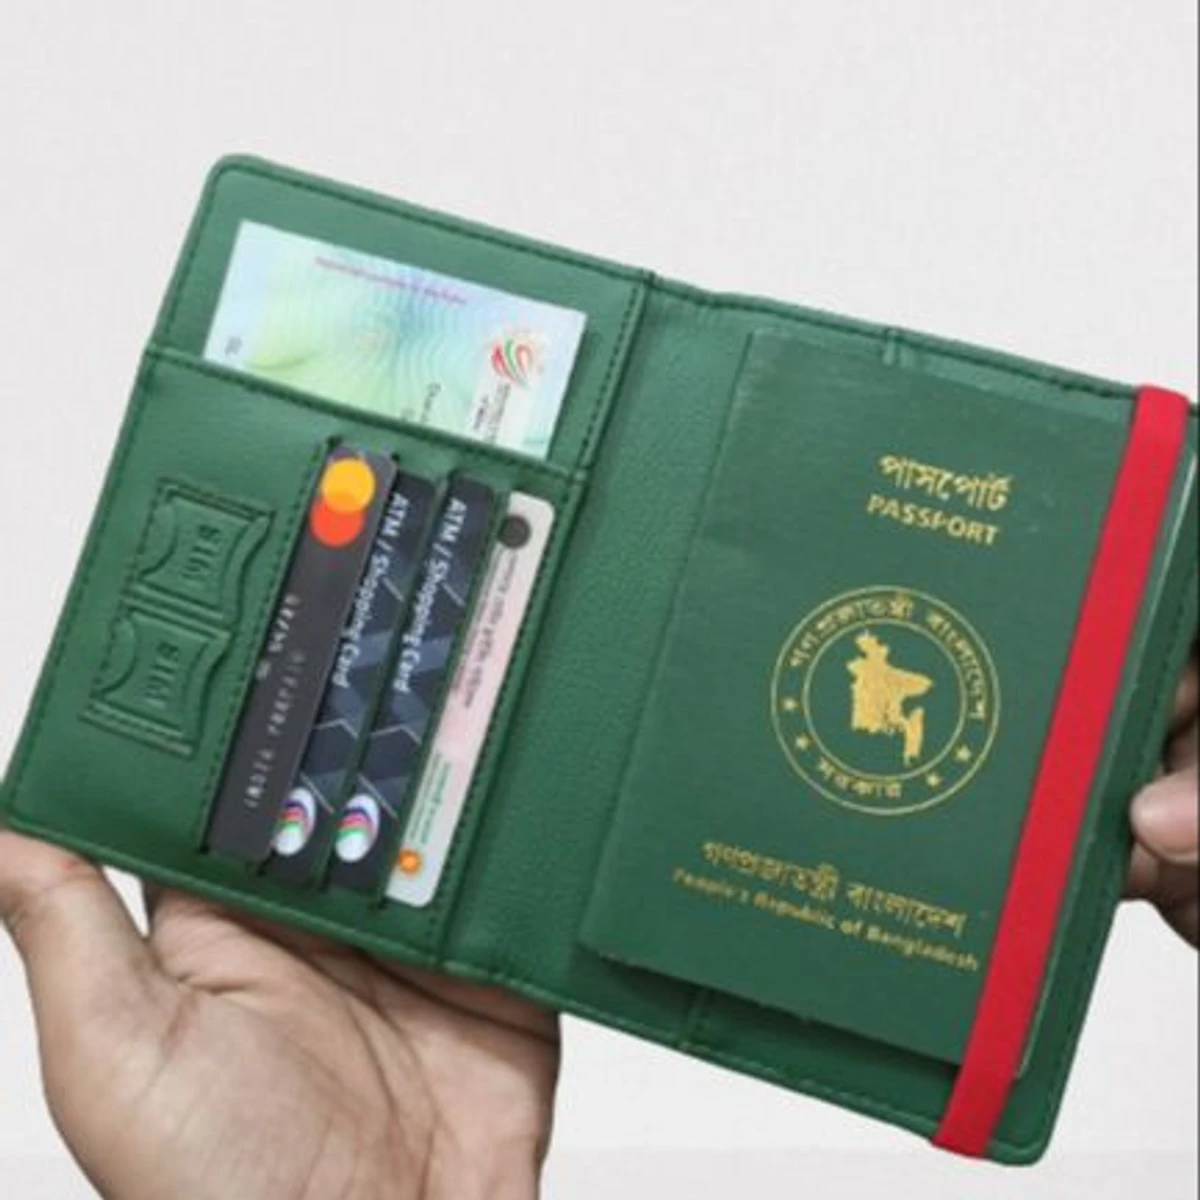 Passport and Card Holder Bangladeshi Passport and Card Holder